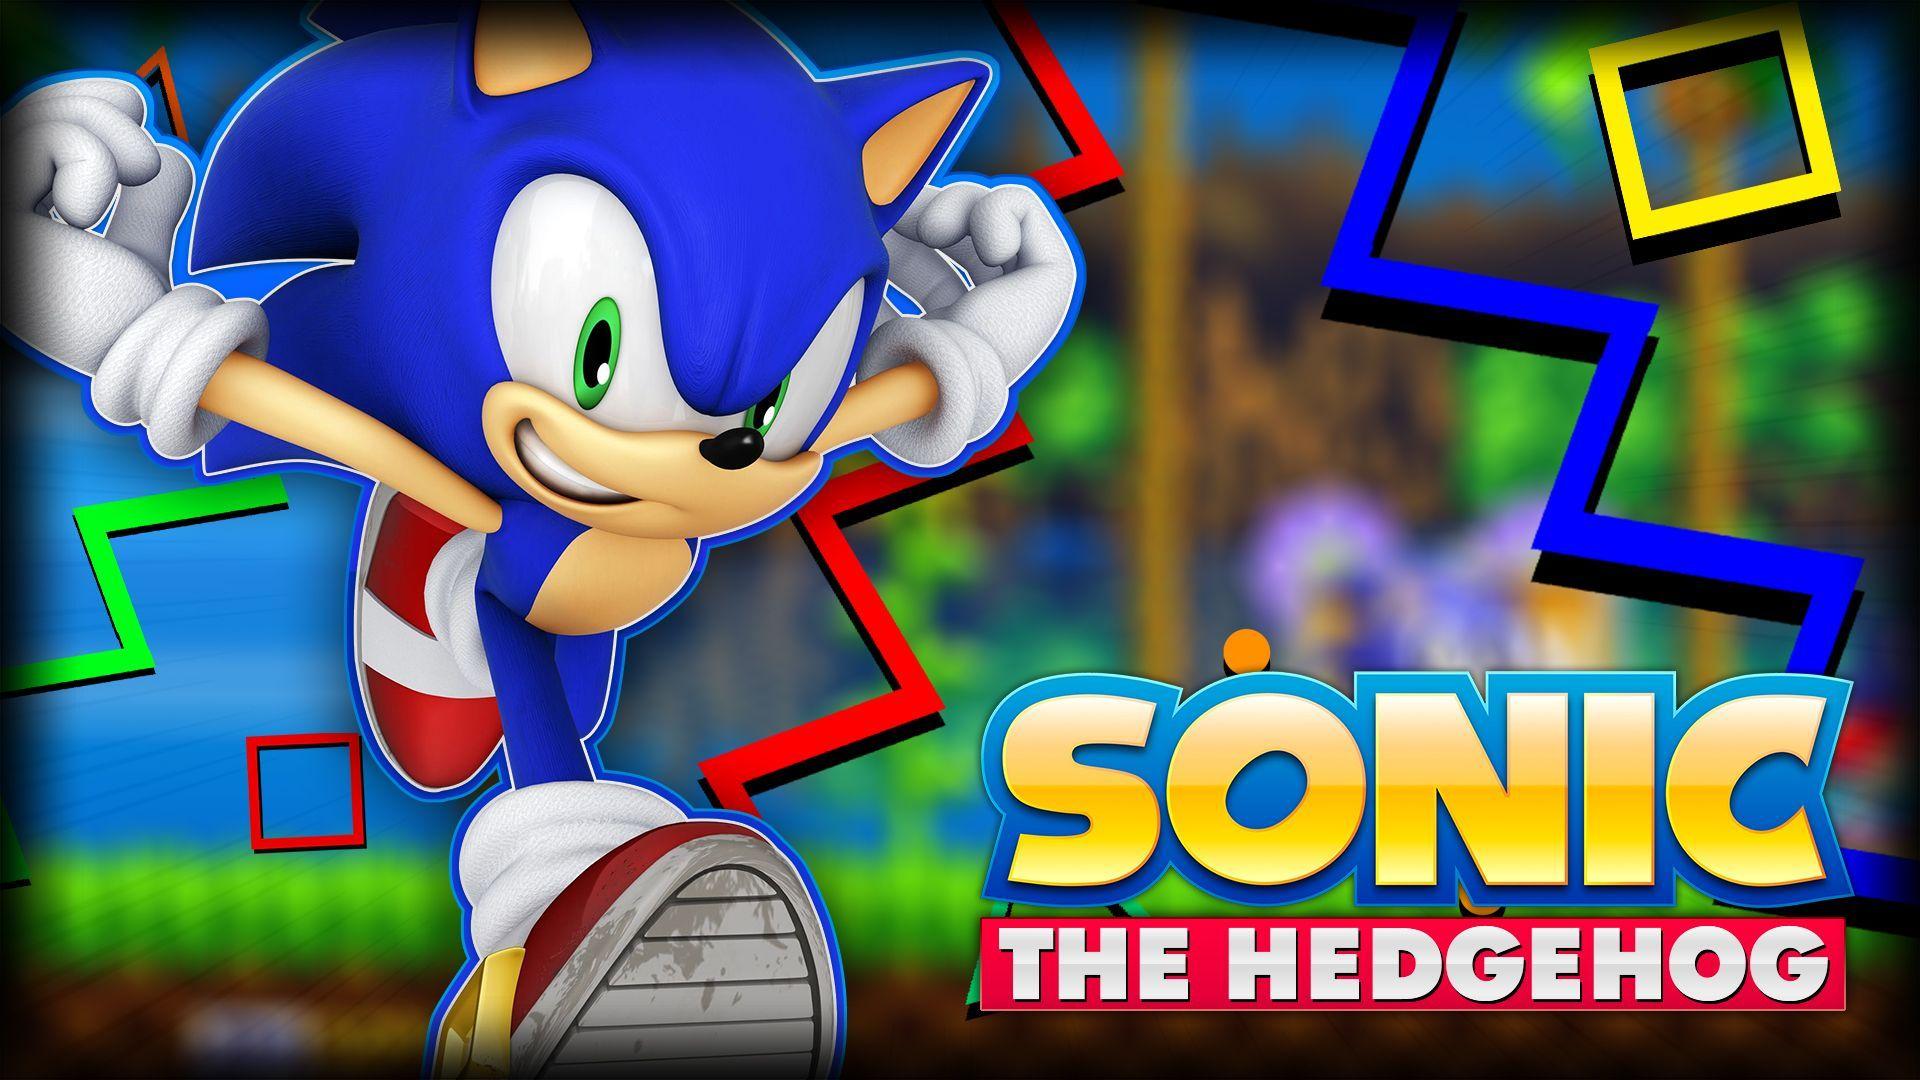 Sonic The Hedgehog HD Wallpaper. Wallpaper, Background, Image